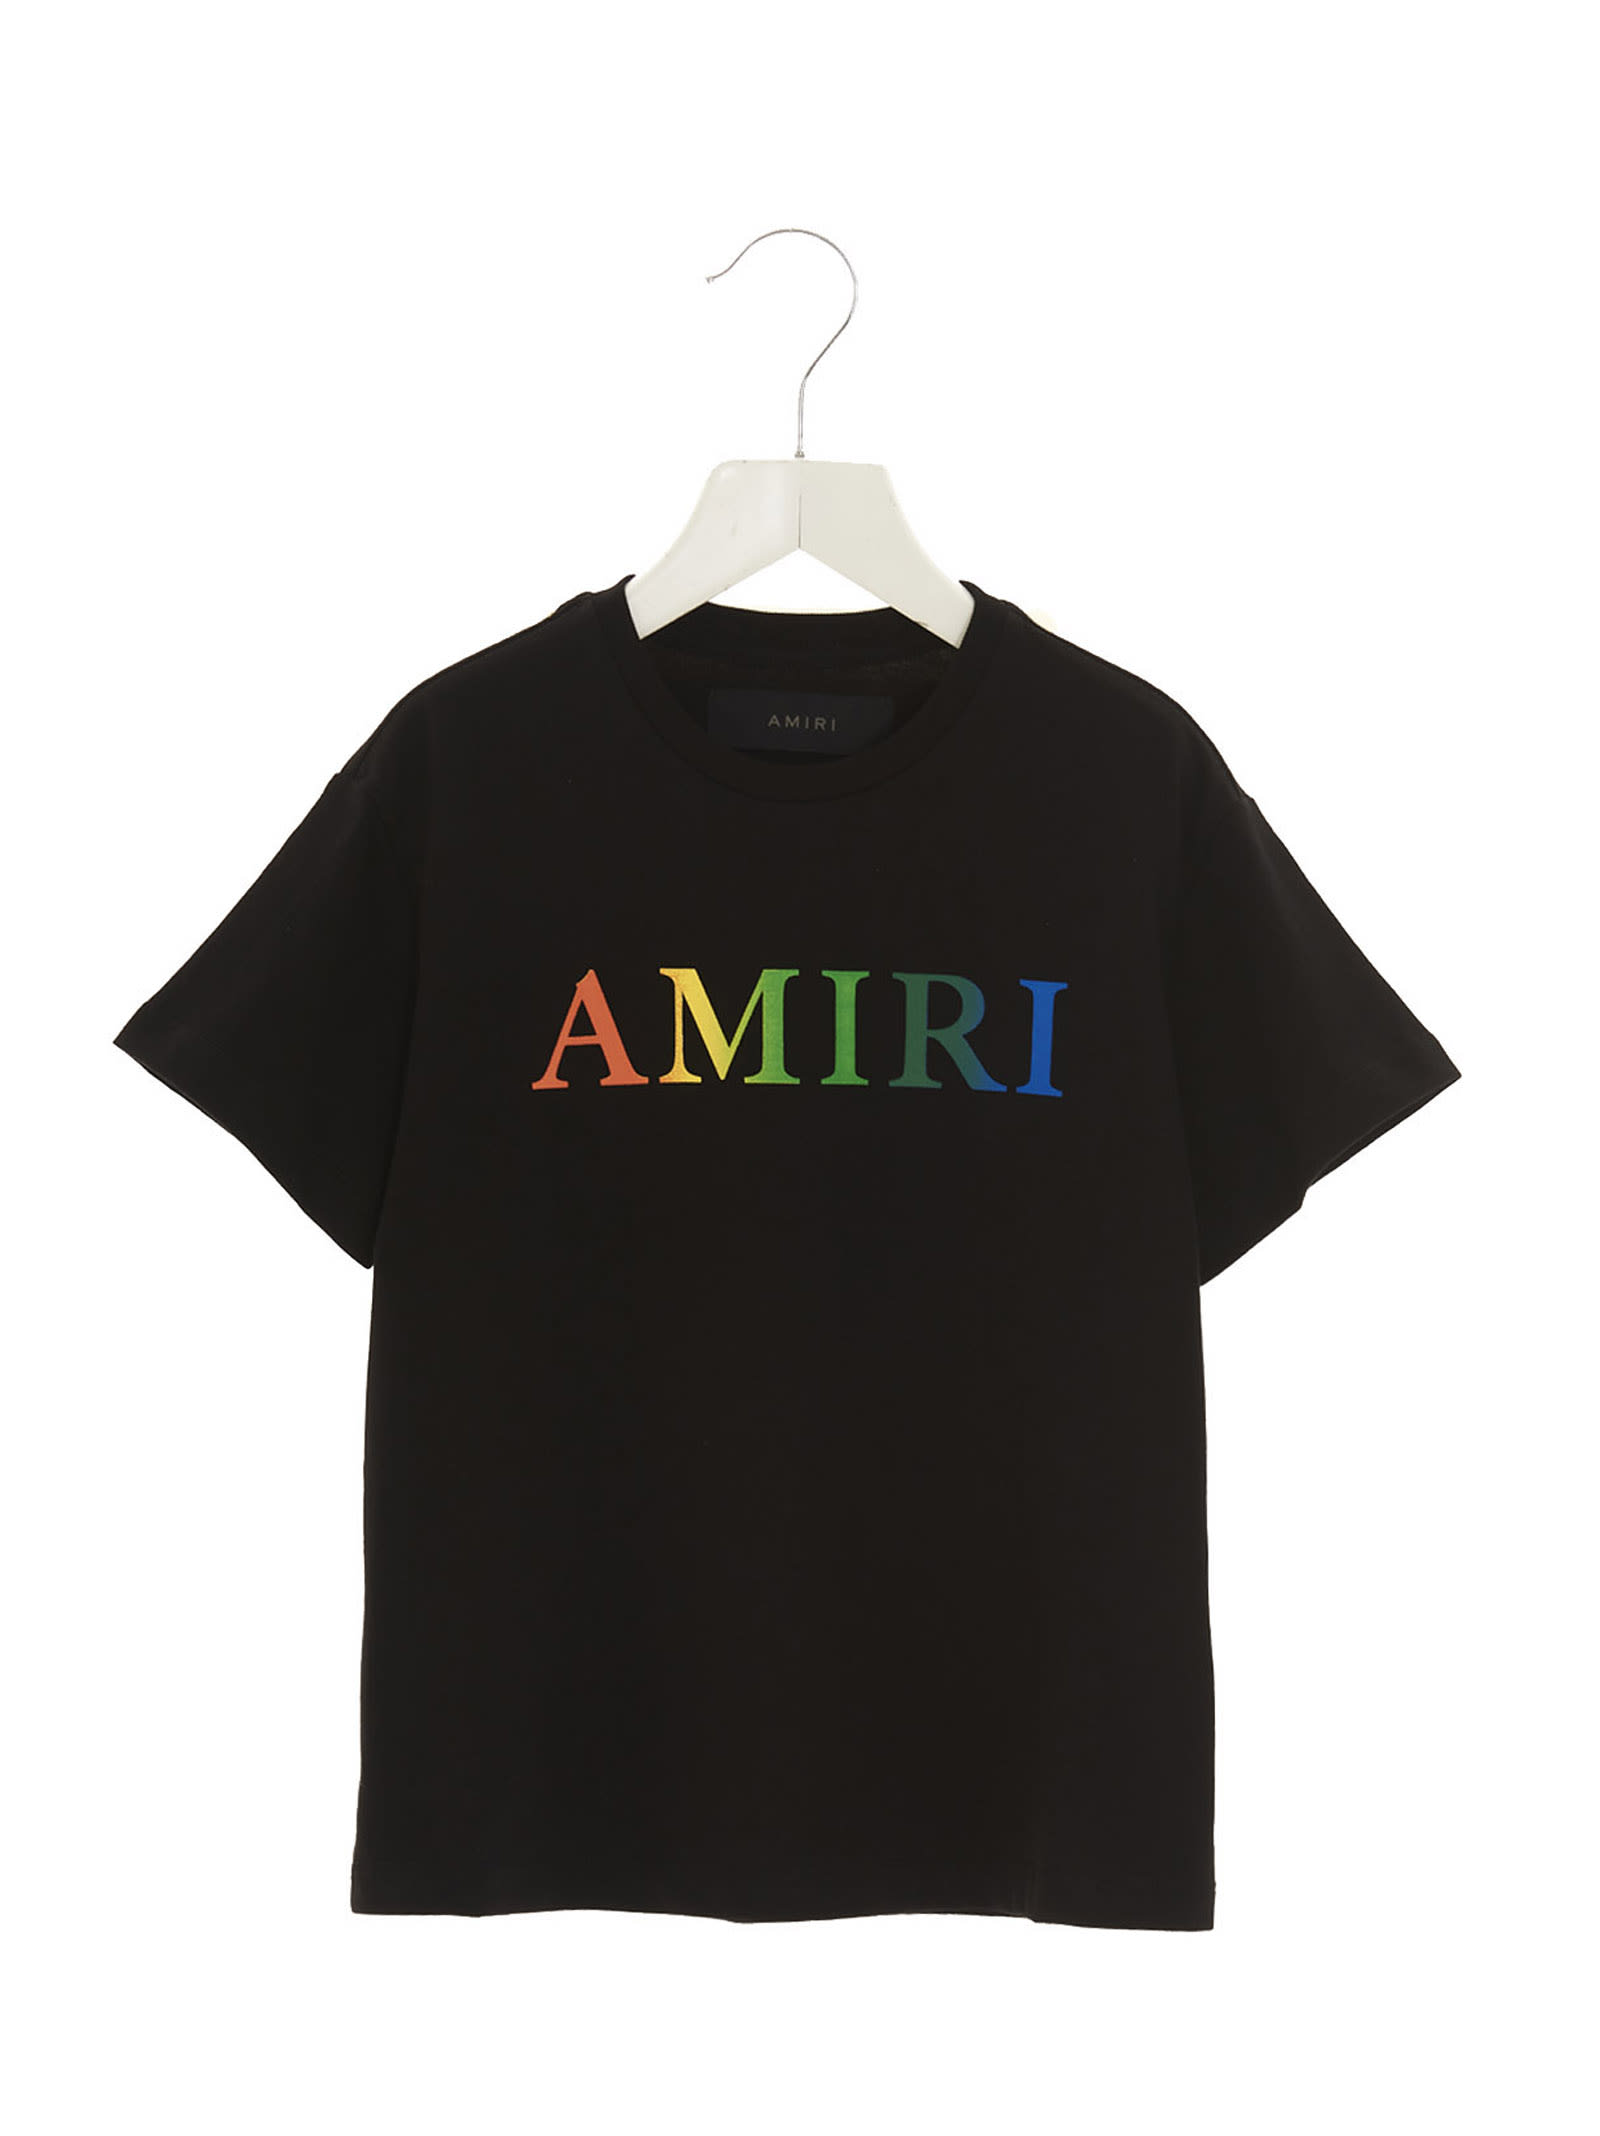 AMIRI RAINBOW T-SHIRT